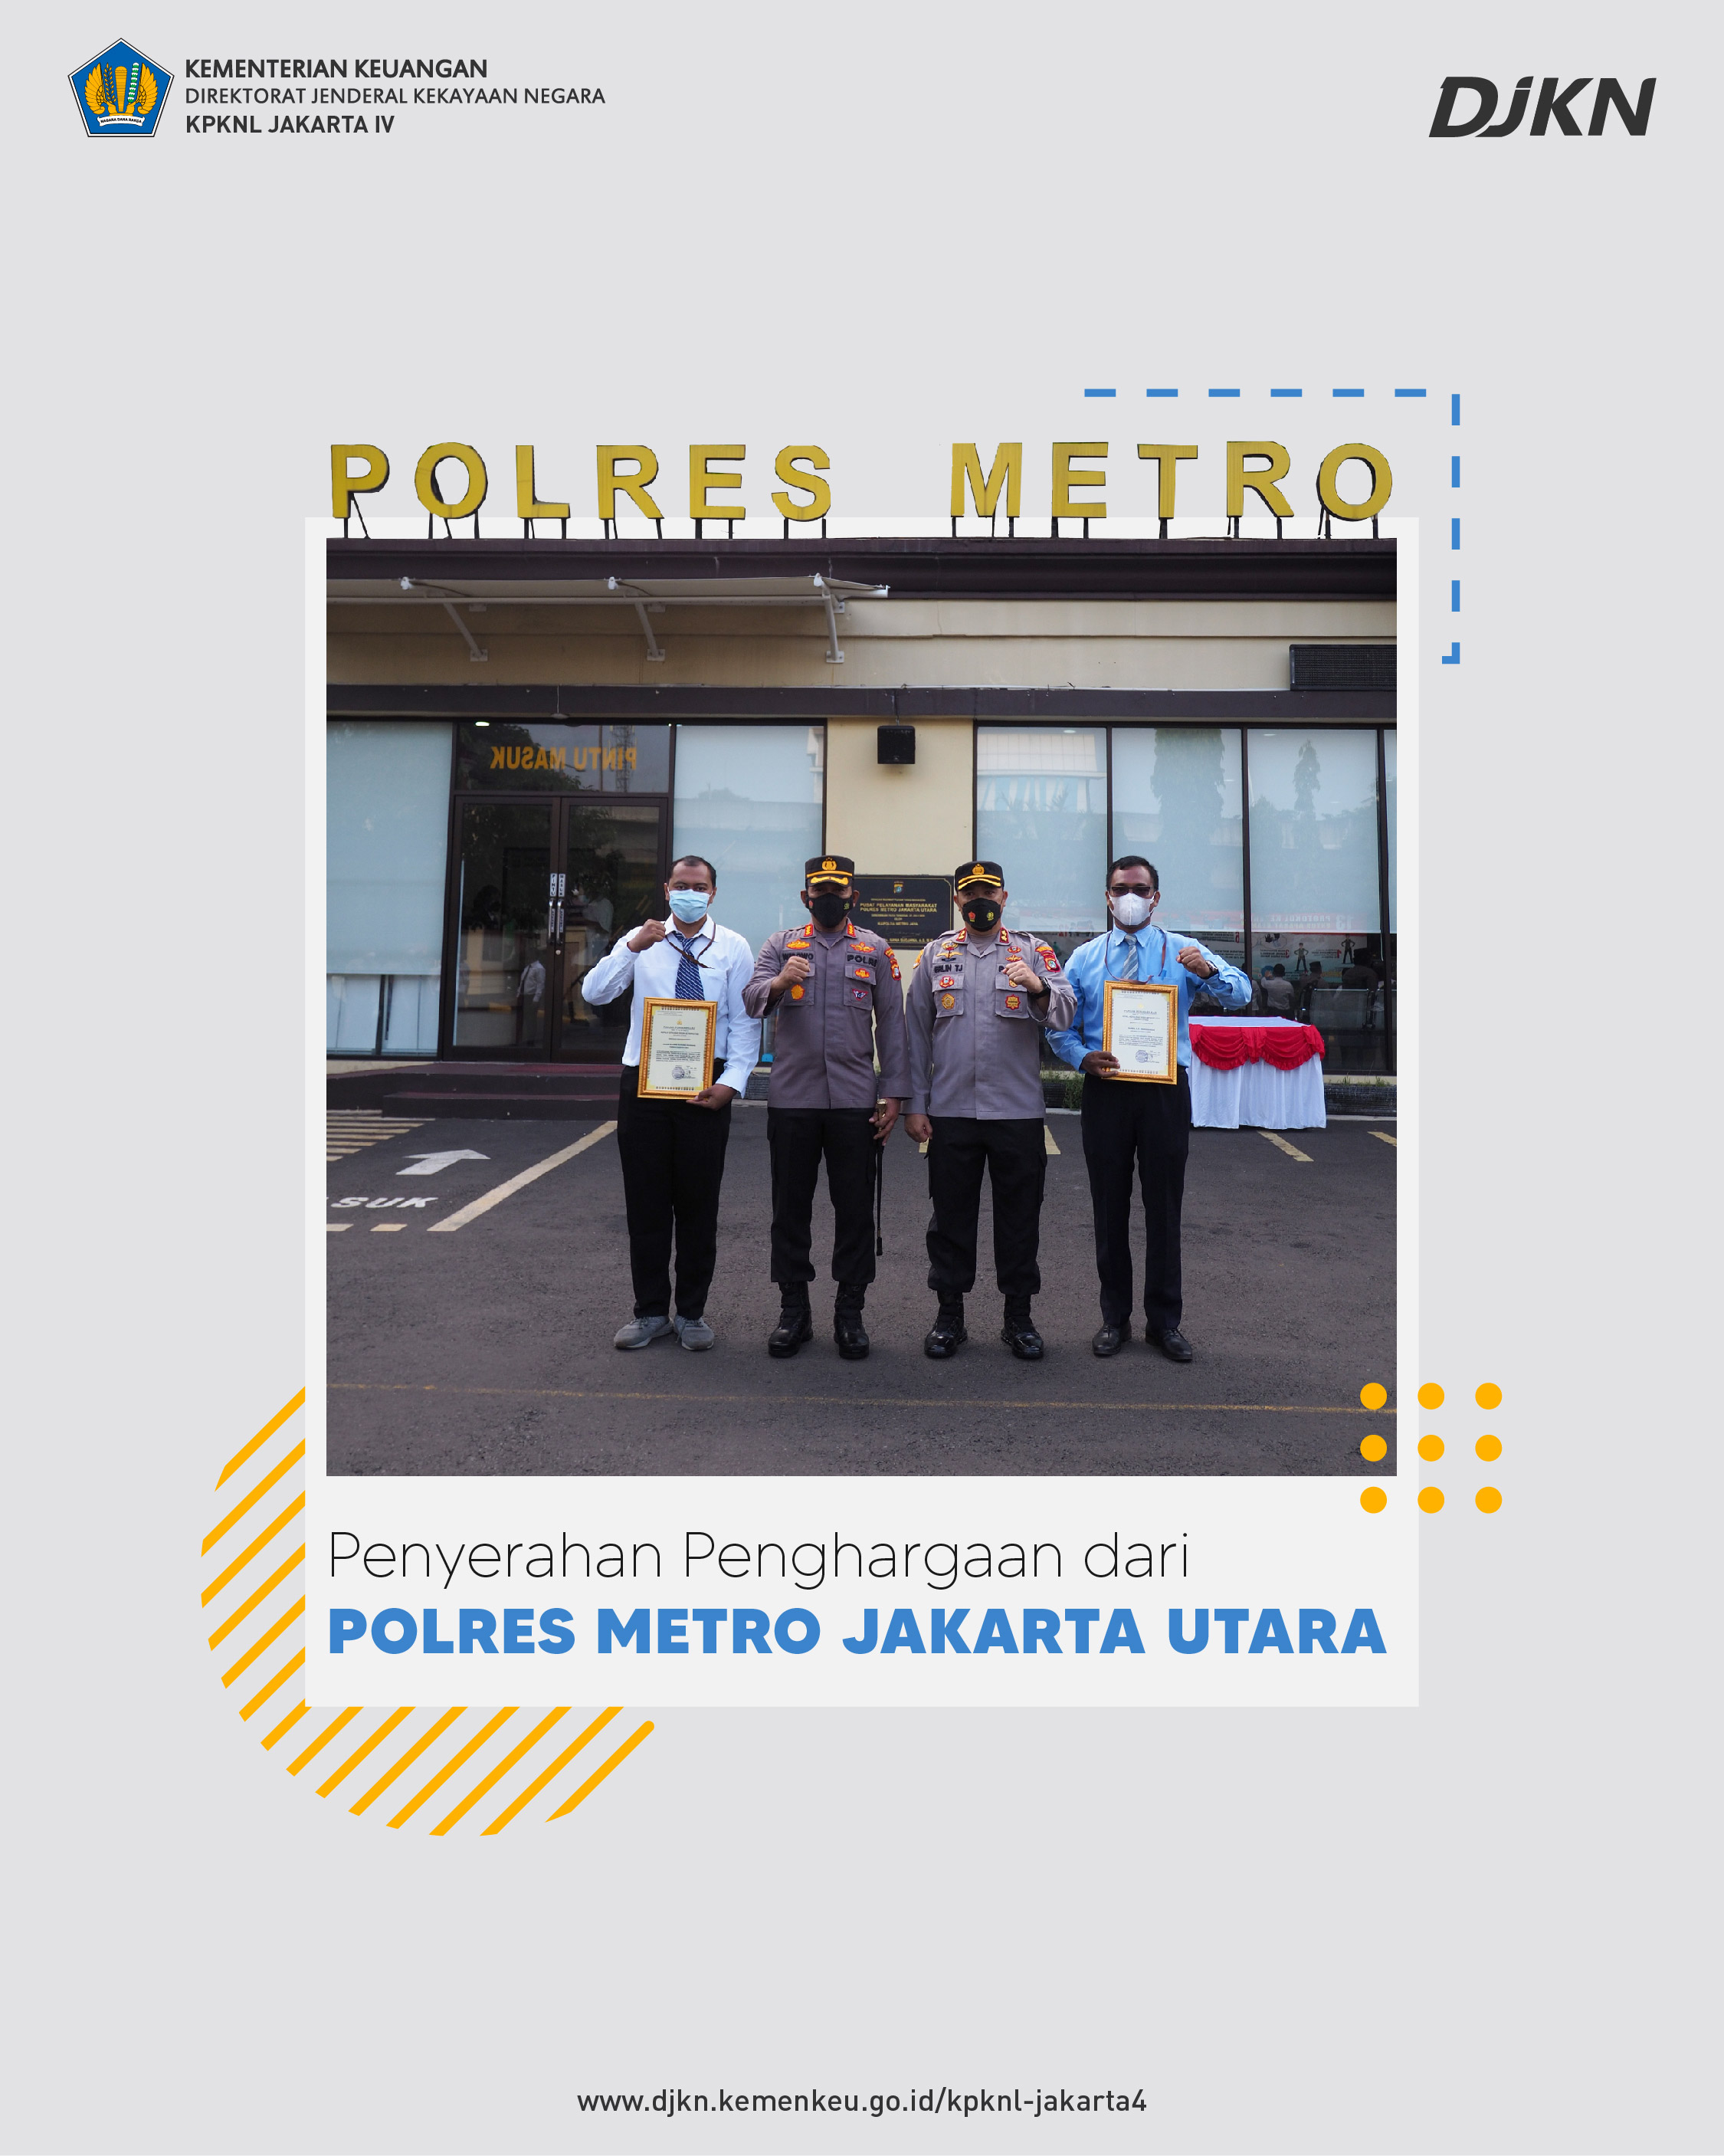 KPKNL Jakarta IV Menerima Penghargaan dari Polres Metro Jakarta Utara